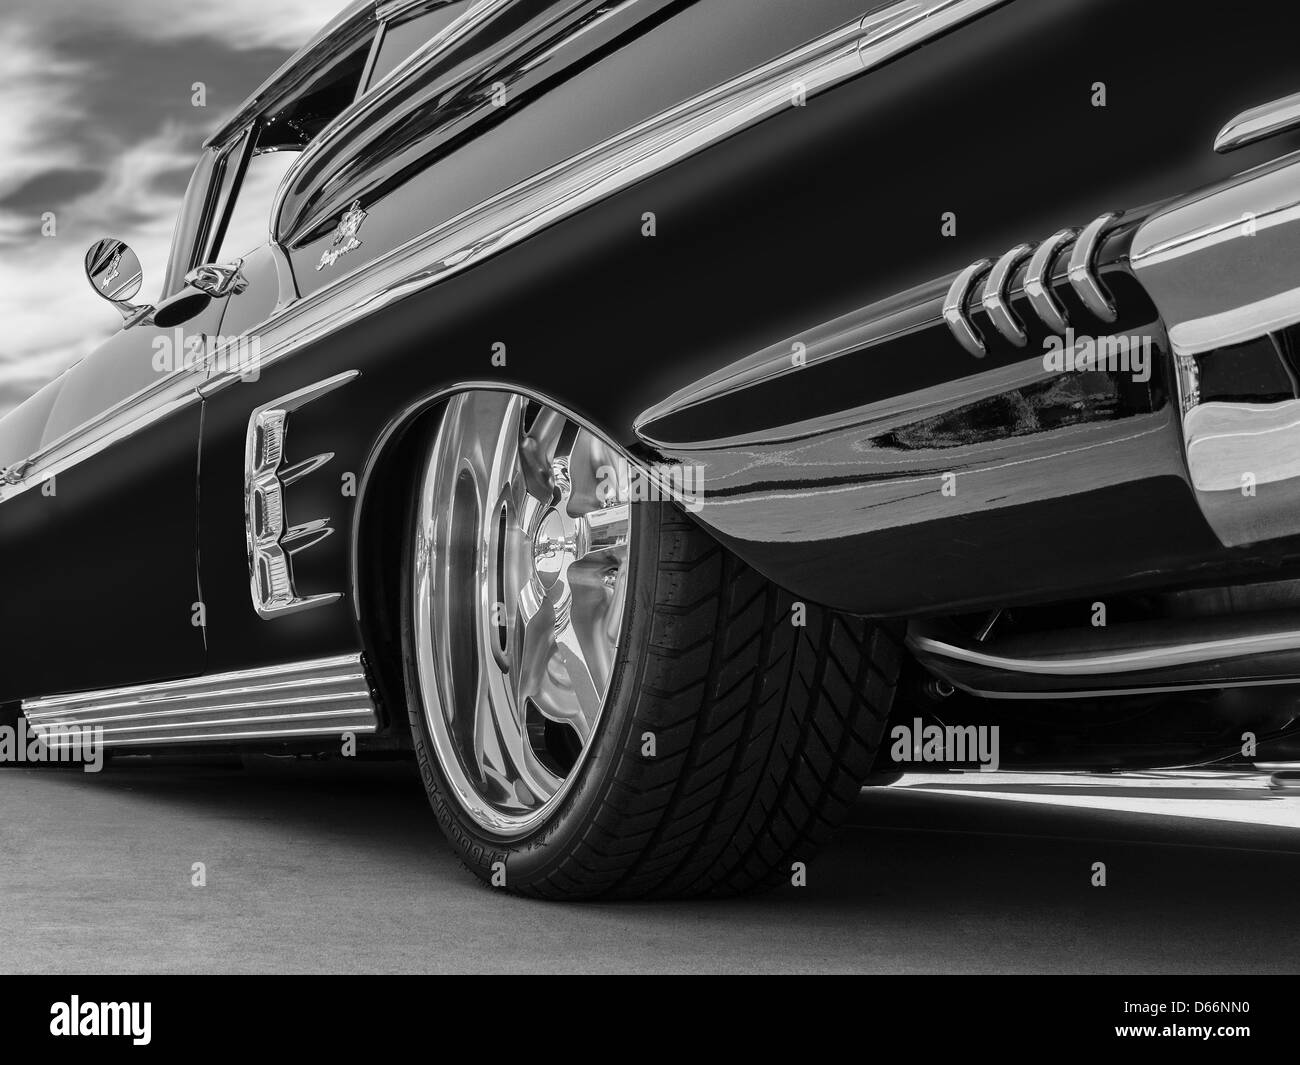 1958 Impala Chevrolet Stock Photo